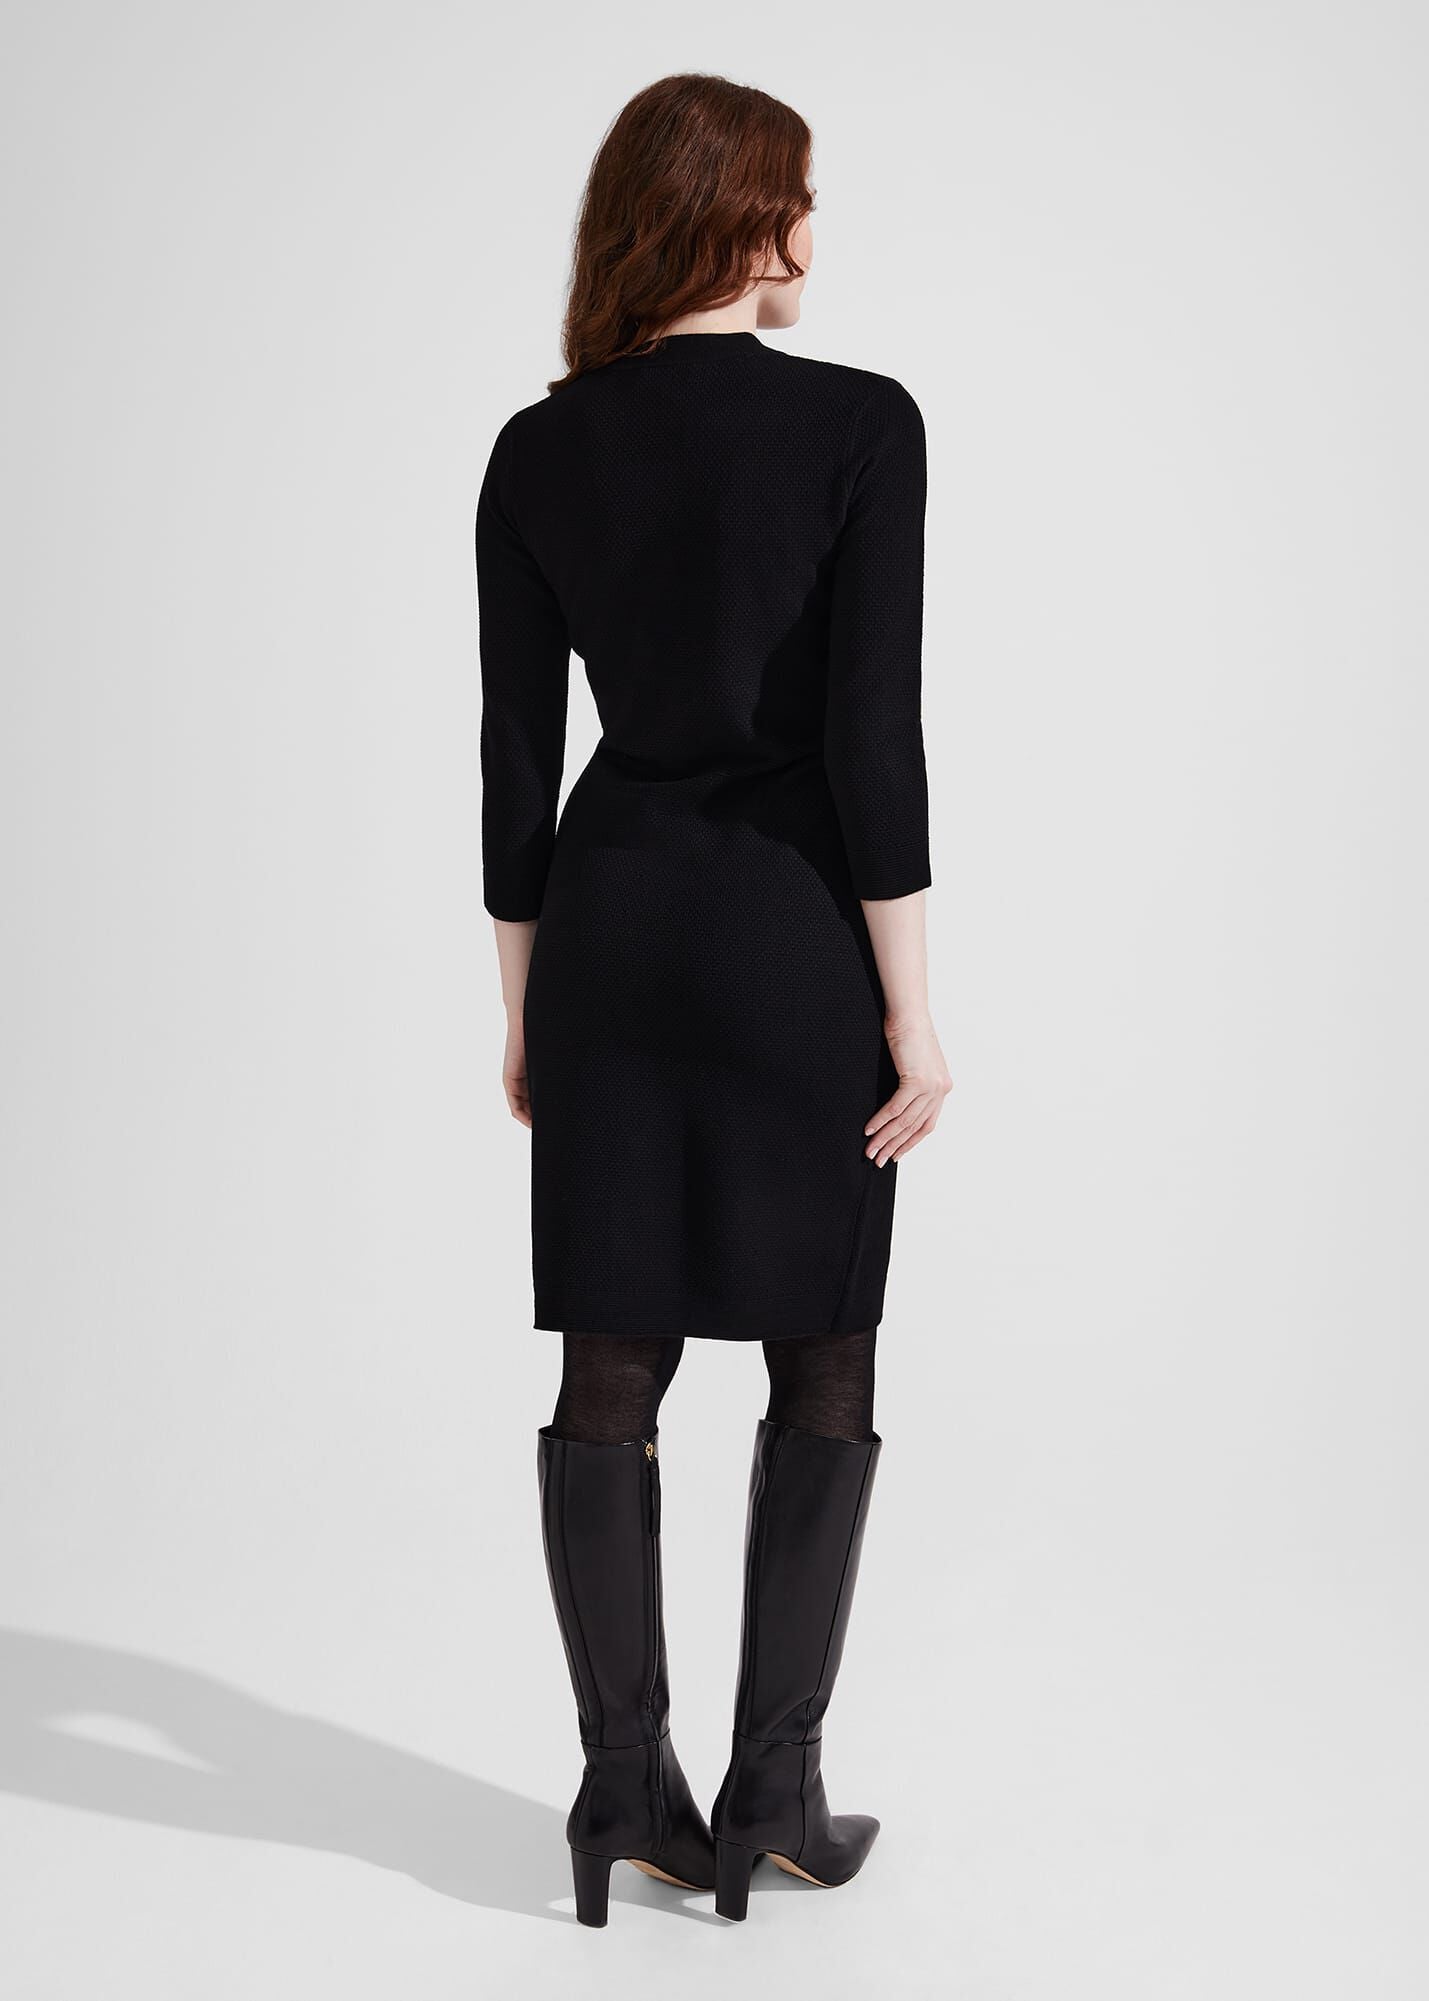 Marlee Knitted Dress 0223/9500/1085l00 Black